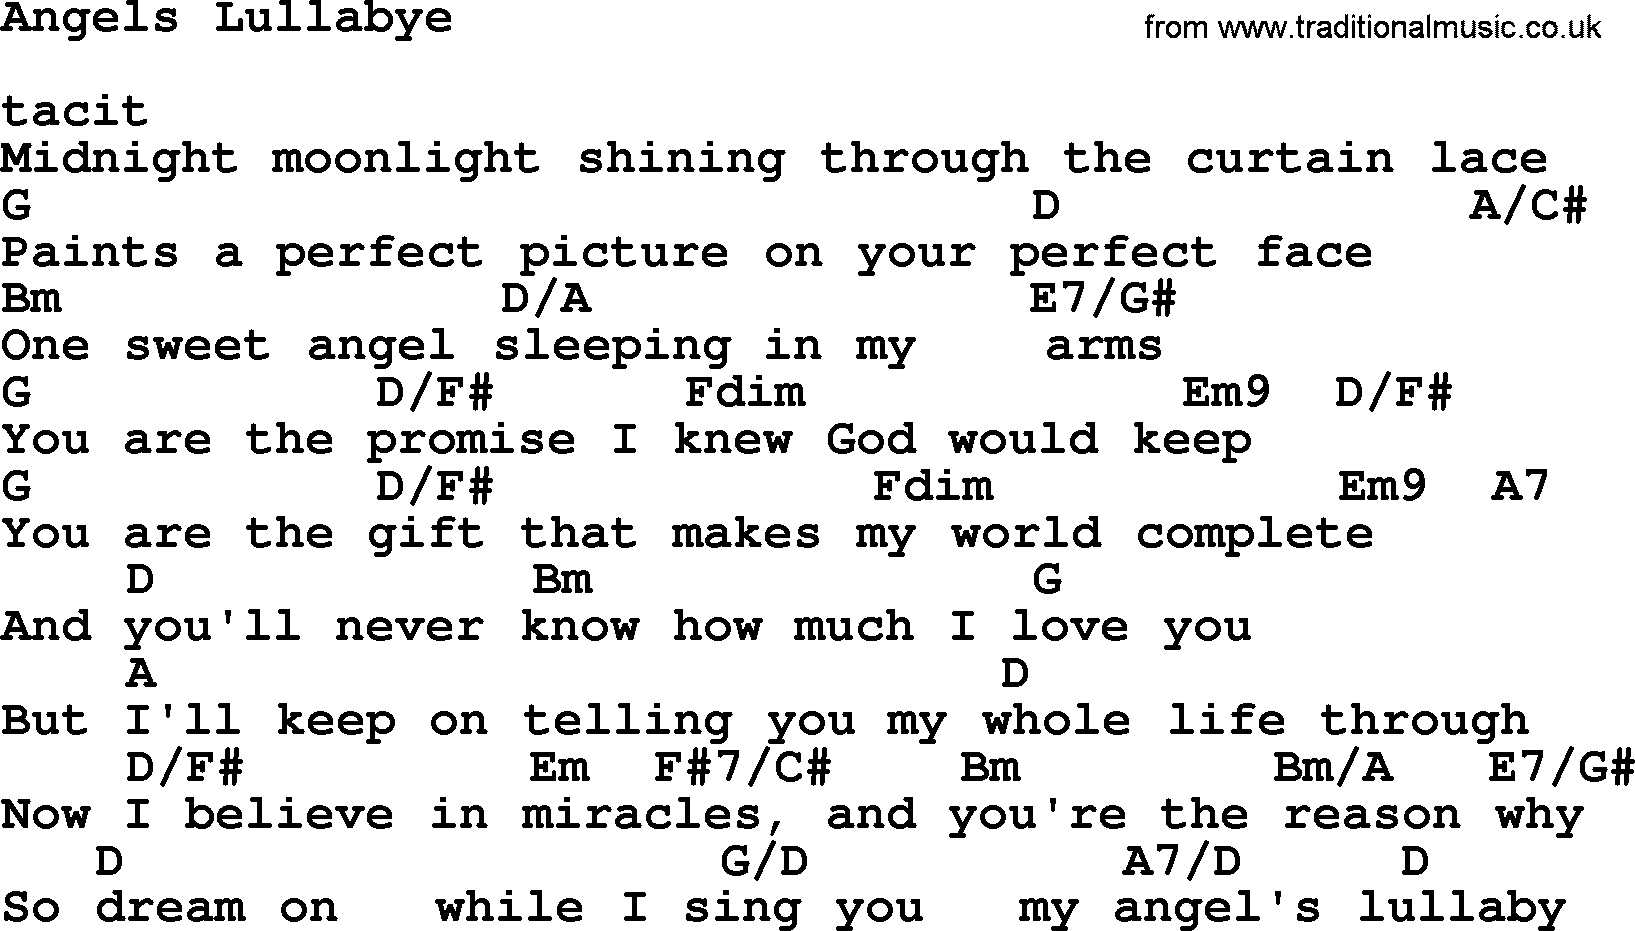 Reba McEntire song: Angels Lullabye, lyrics and chords